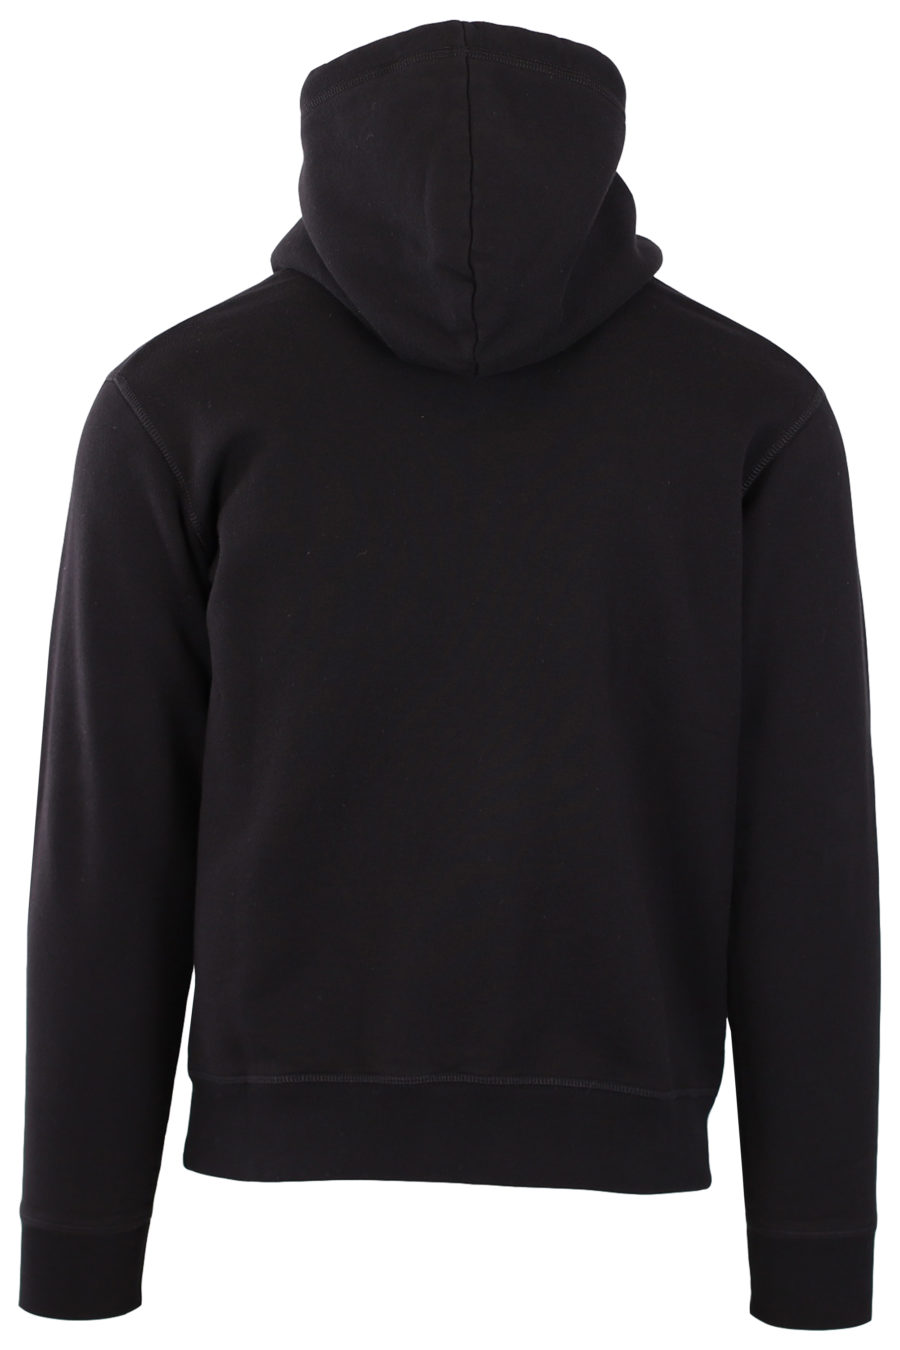 Black hooded sweatshirt with logo "Ceresio 9 Milano" - 85ef45ad0f0d6d146c4f34af8002e500bea99387